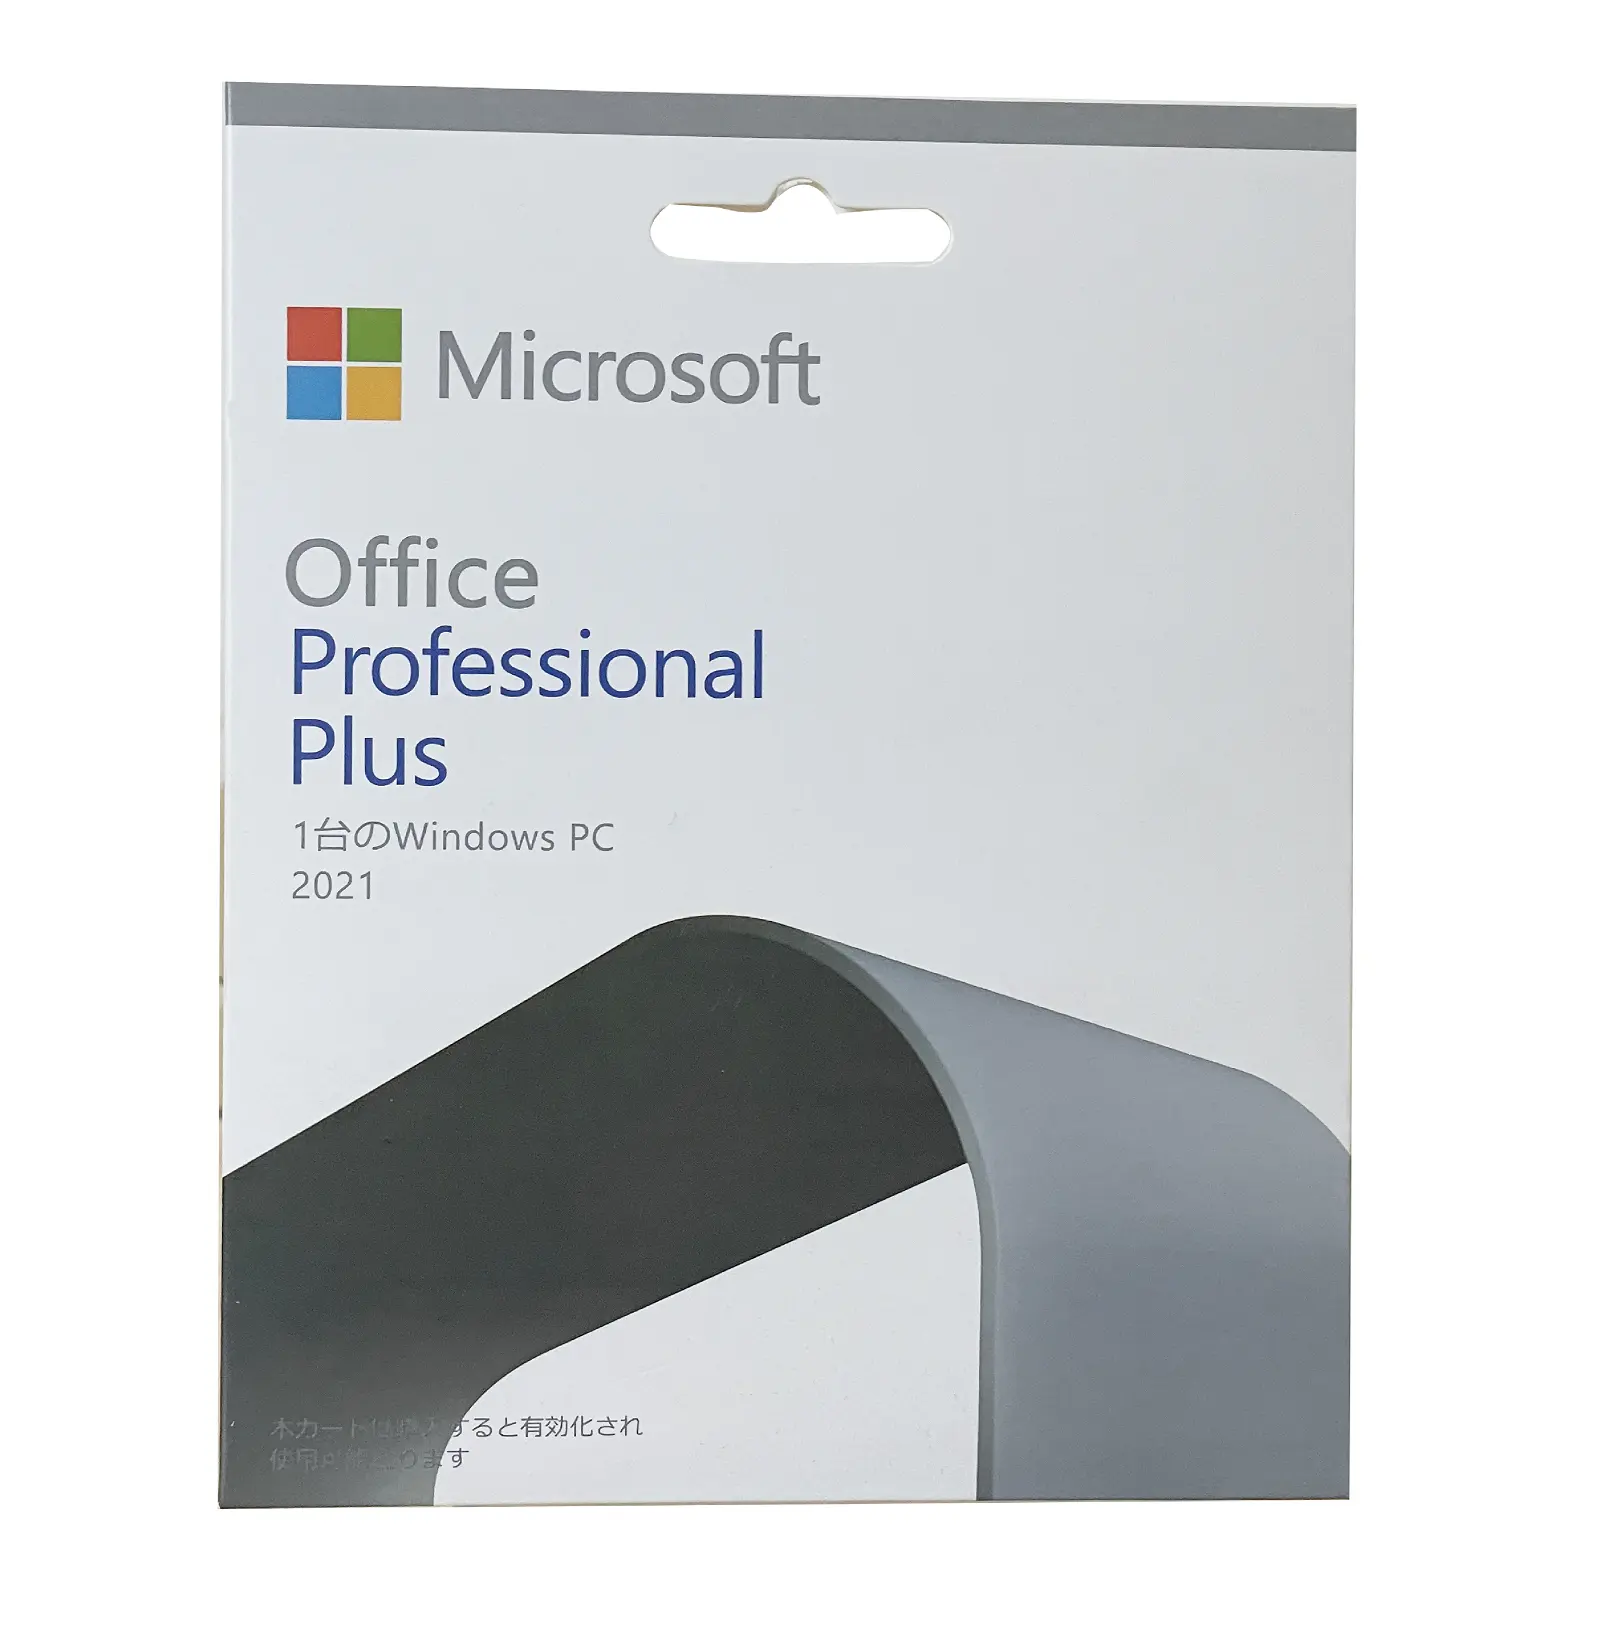 Microsoft Office 2021 Professional Plus JAPANESE version Edition DVD Bag